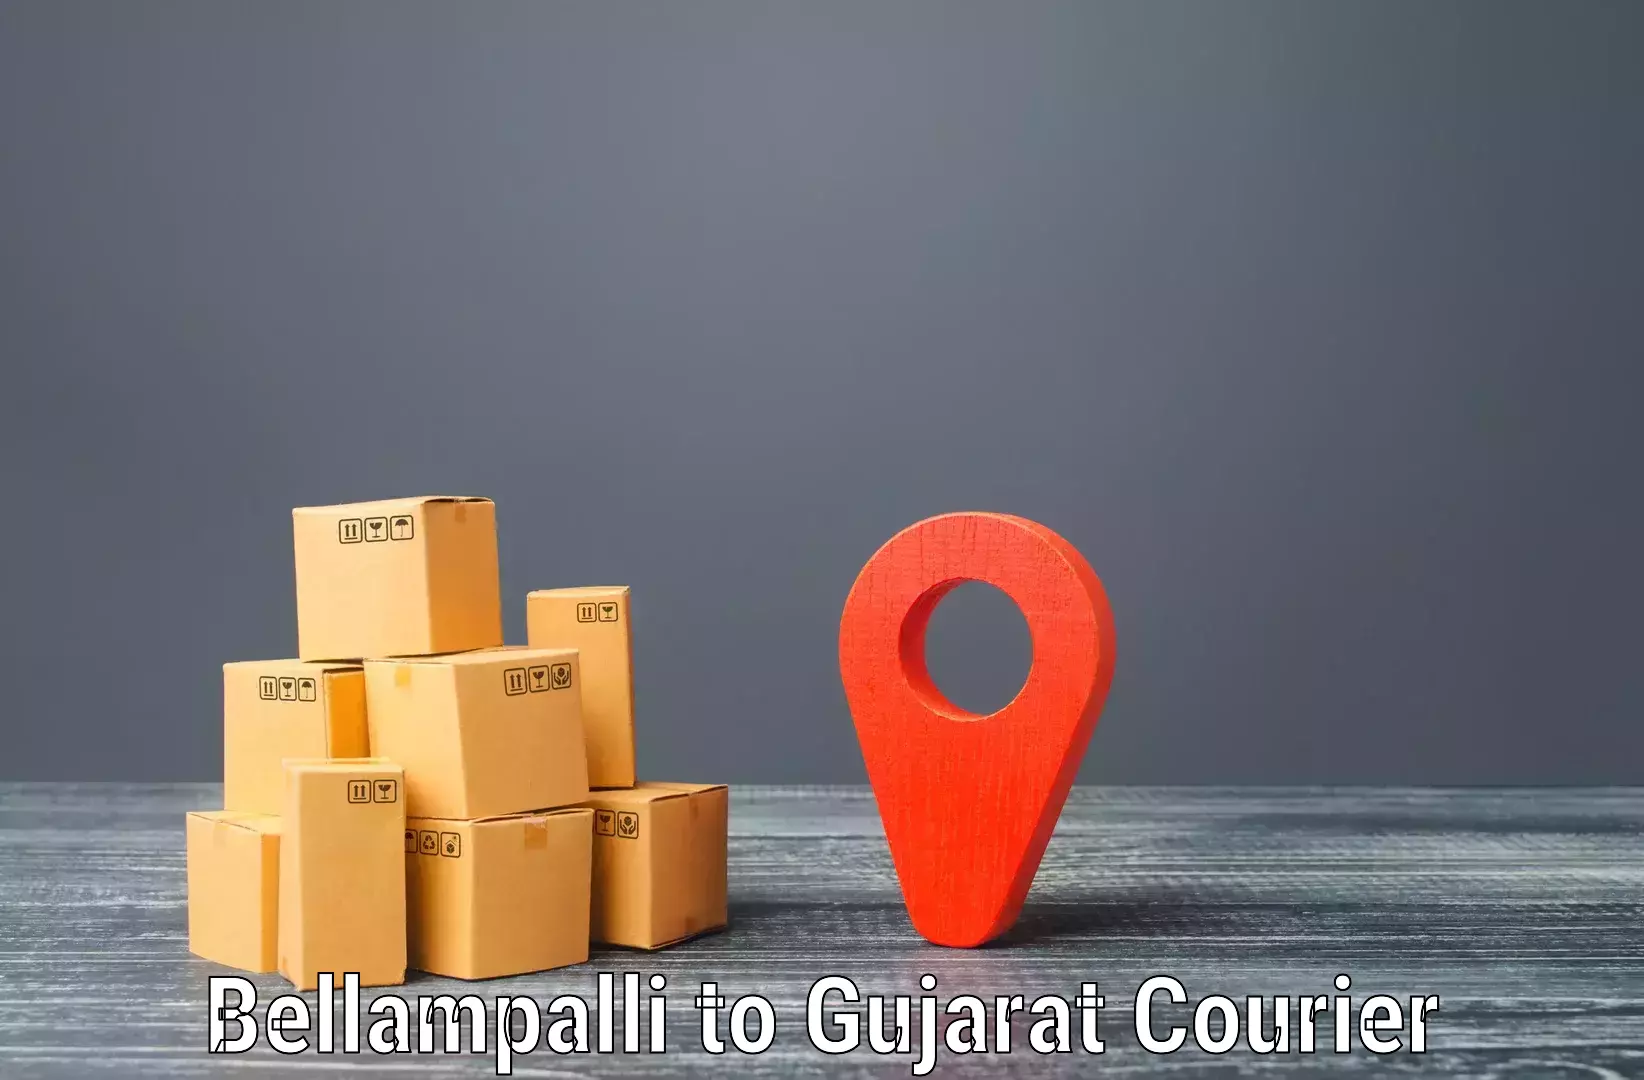 Flexible delivery schedules Bellampalli to Patan Gujarat